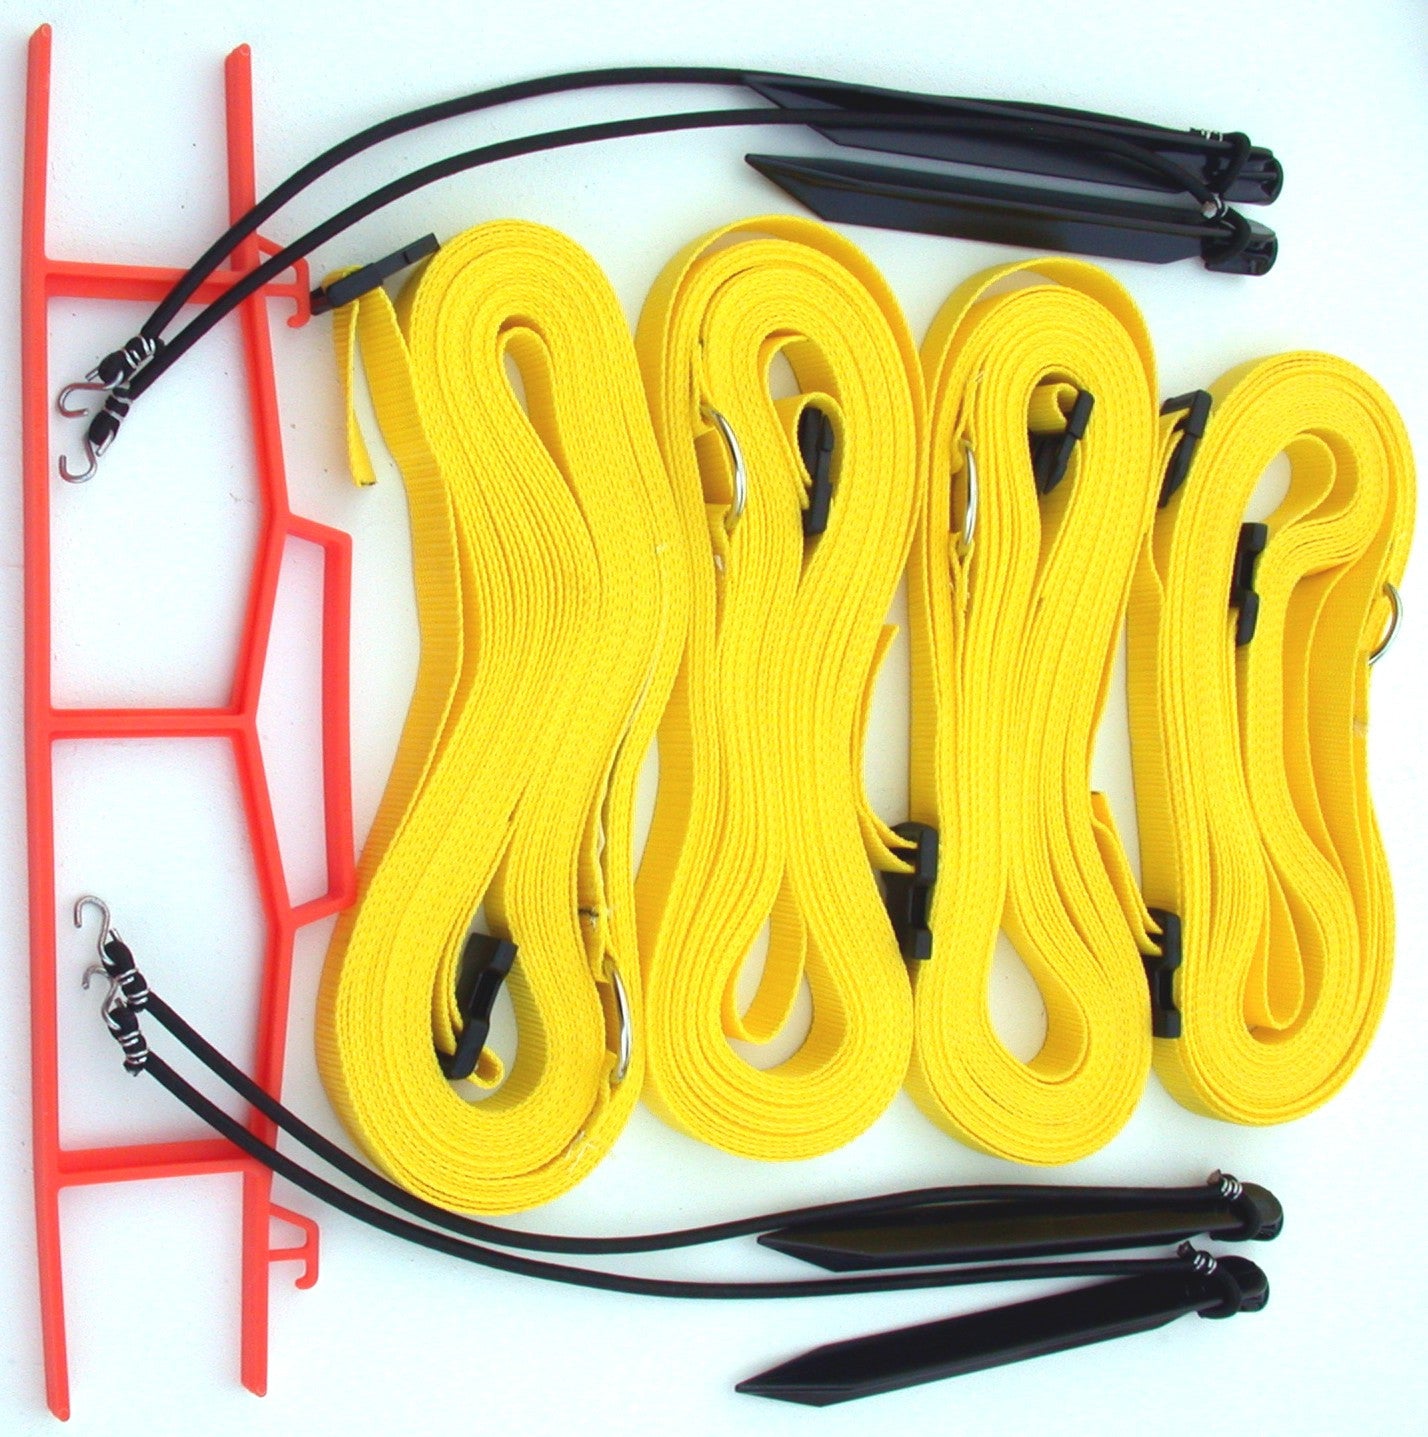 17AYS-yellow 1-inch adjustable web boundary, sand pegs, storage winder